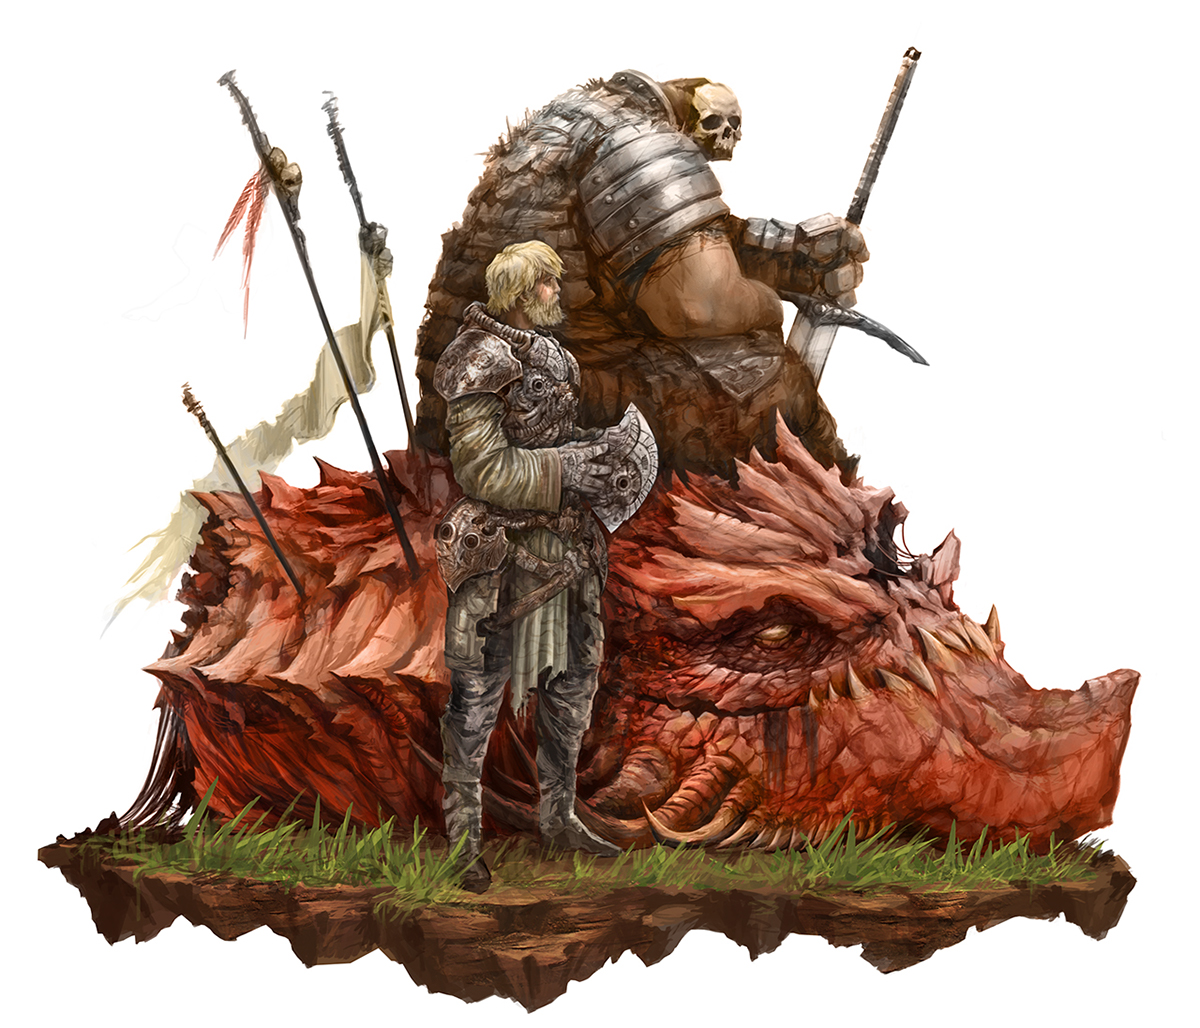 Hunters badass hell knight concept art Sword skull dragon fantasy heroic epic buddies eyardt artwork